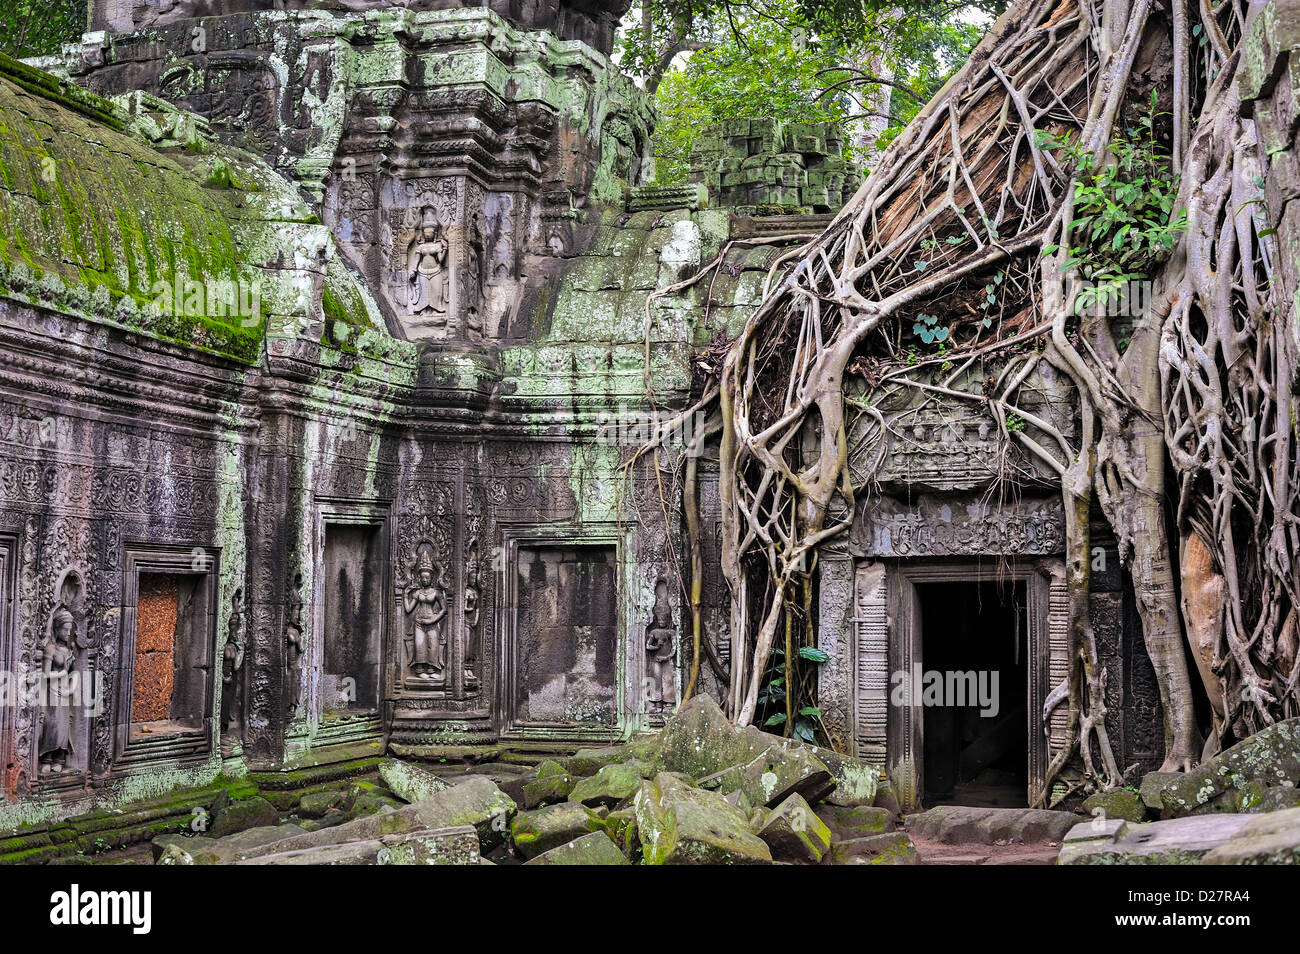 Angkor Wat, Kambodscha - Würgefeige (Ficus sp.) Baumwurzeln auf die antiken Tempel Preah Khan Stockfoto